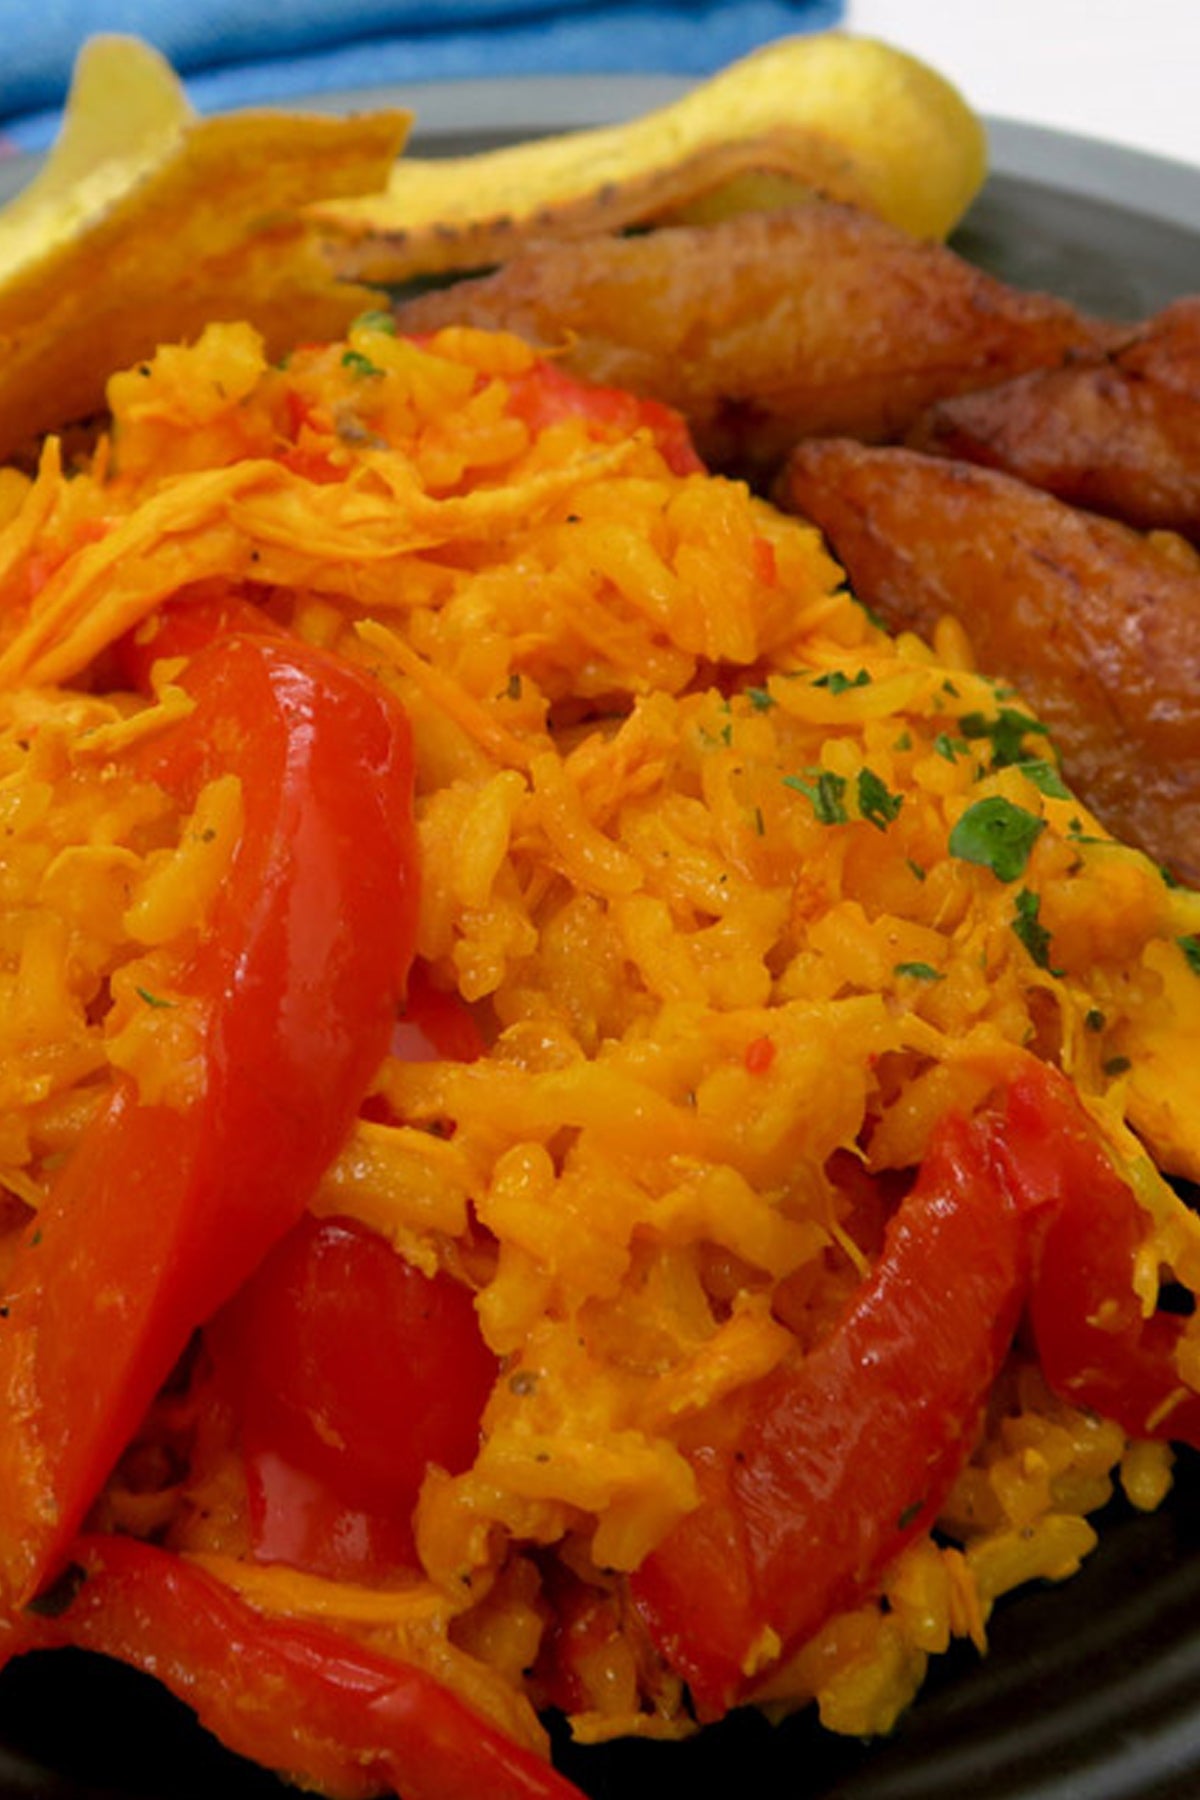 arroz con pollo - chicken & rice panama style – Savvy Planet